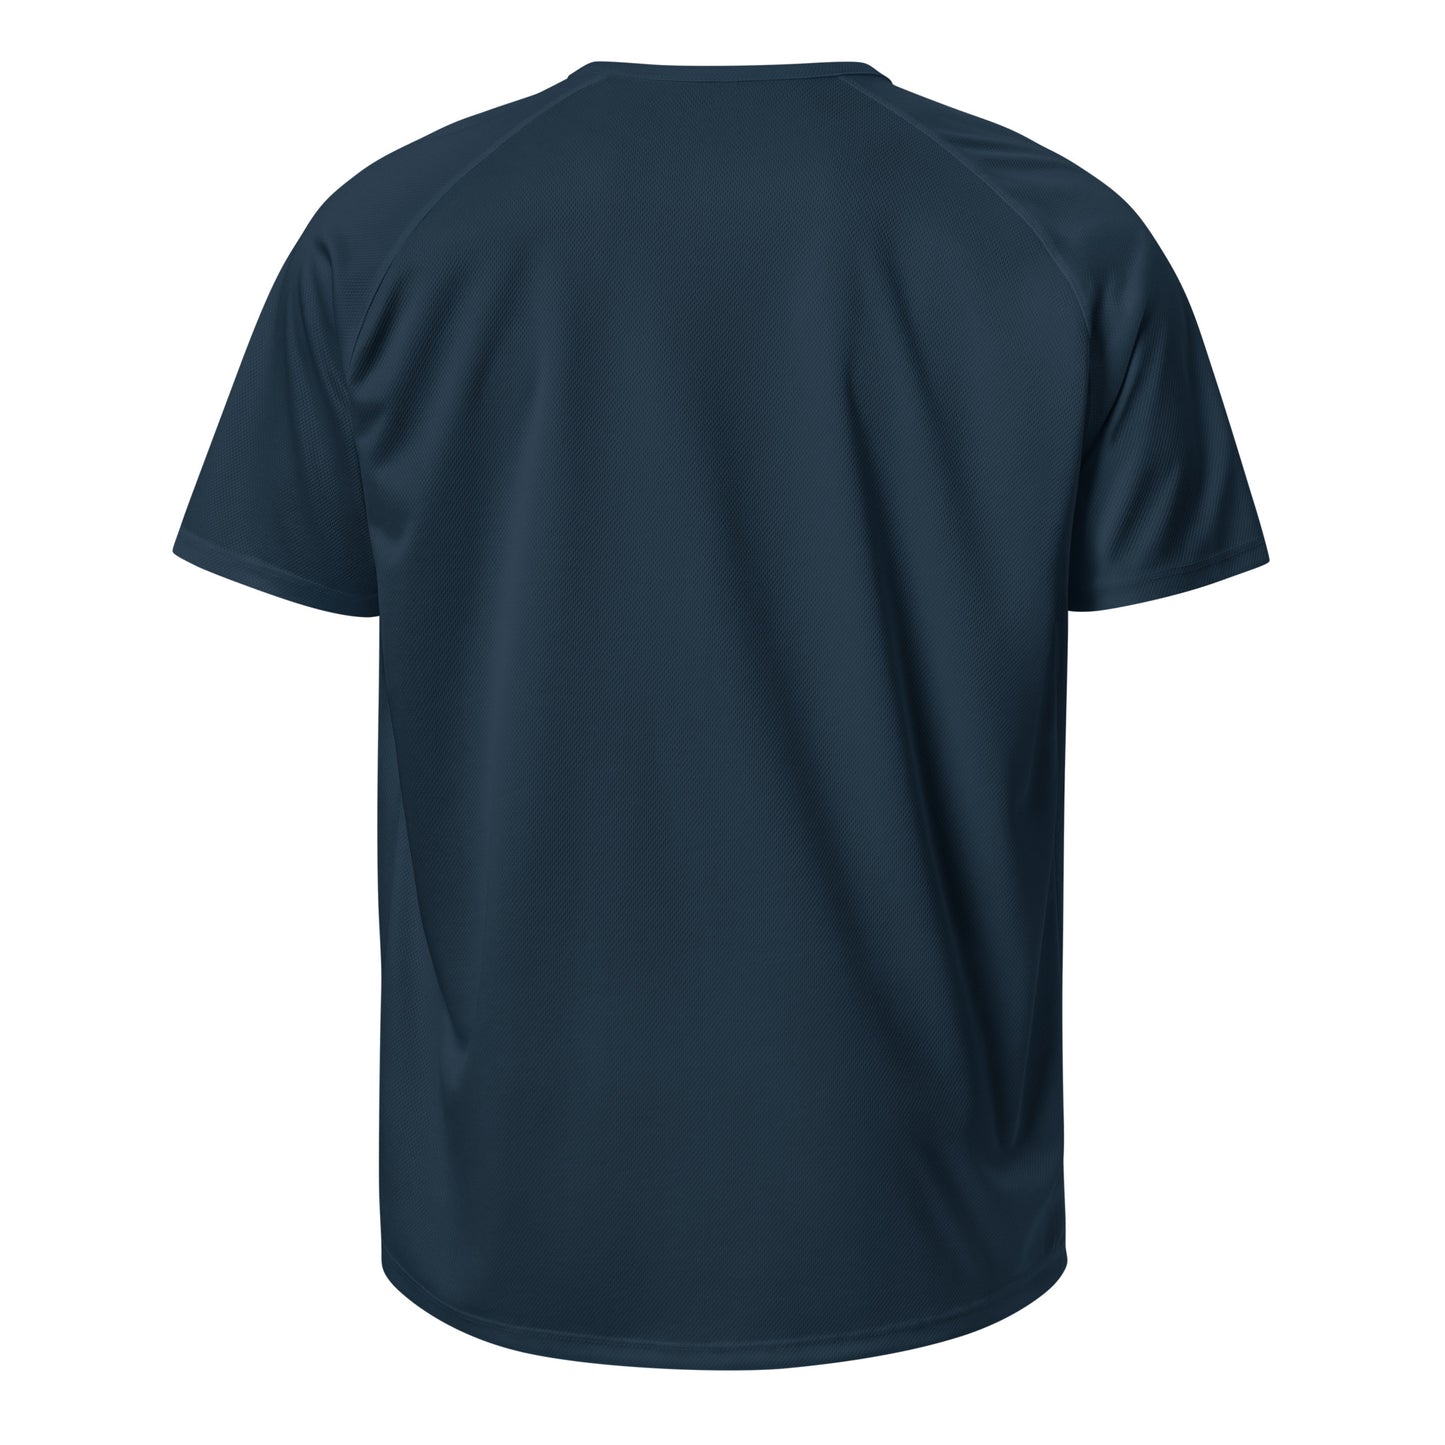 M105 - T-shirt/Sports/Breathable Fabric (Pony : Navy)